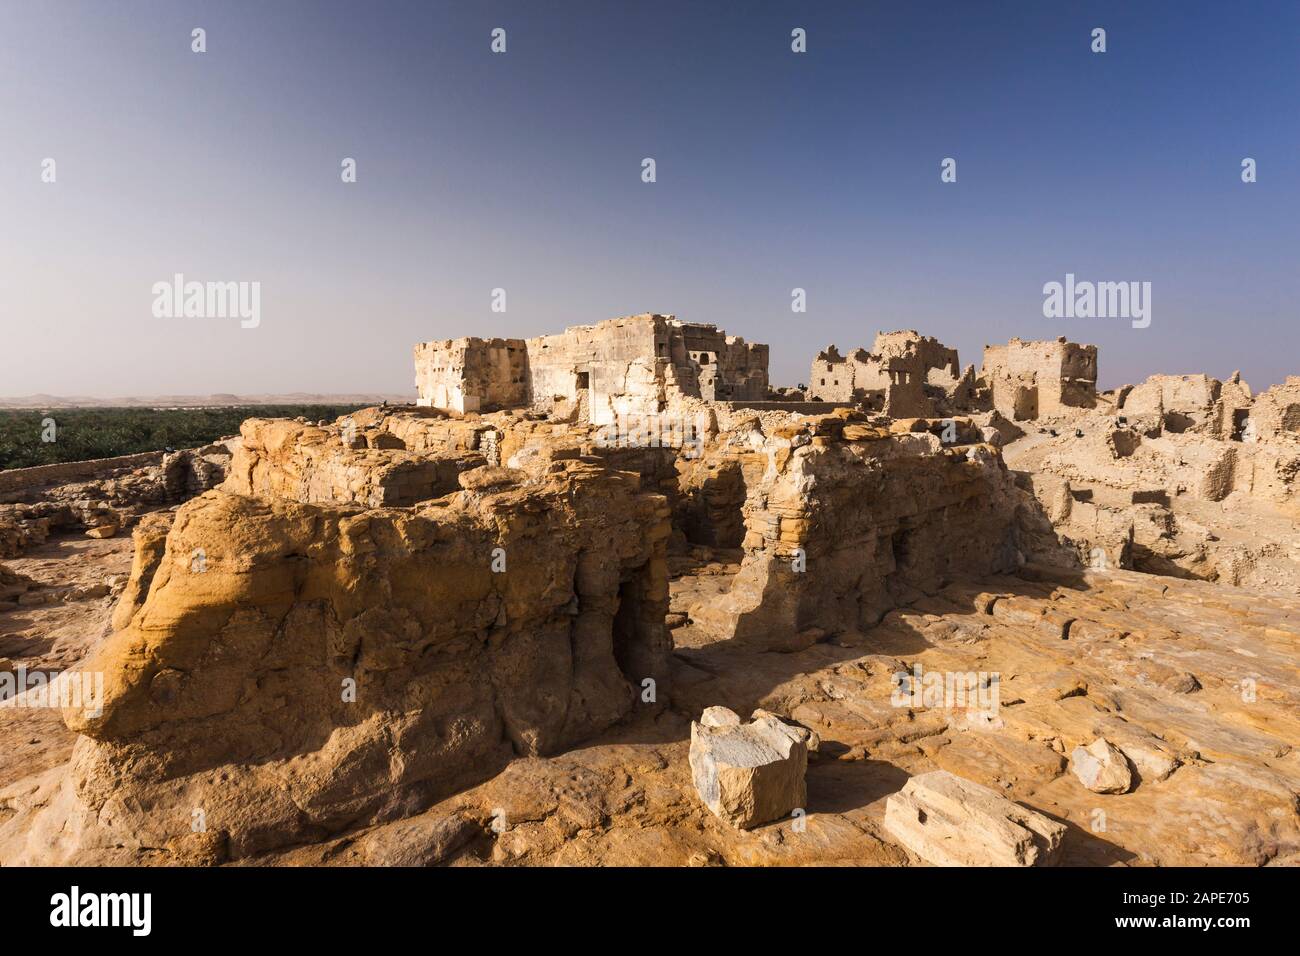 Tempel orakel von Amun auf einem Hügel, Gebel el el-Dakrour, Siwa Oasis, Siwa, Ägypten, Nordafrika, Afrika Stockfoto